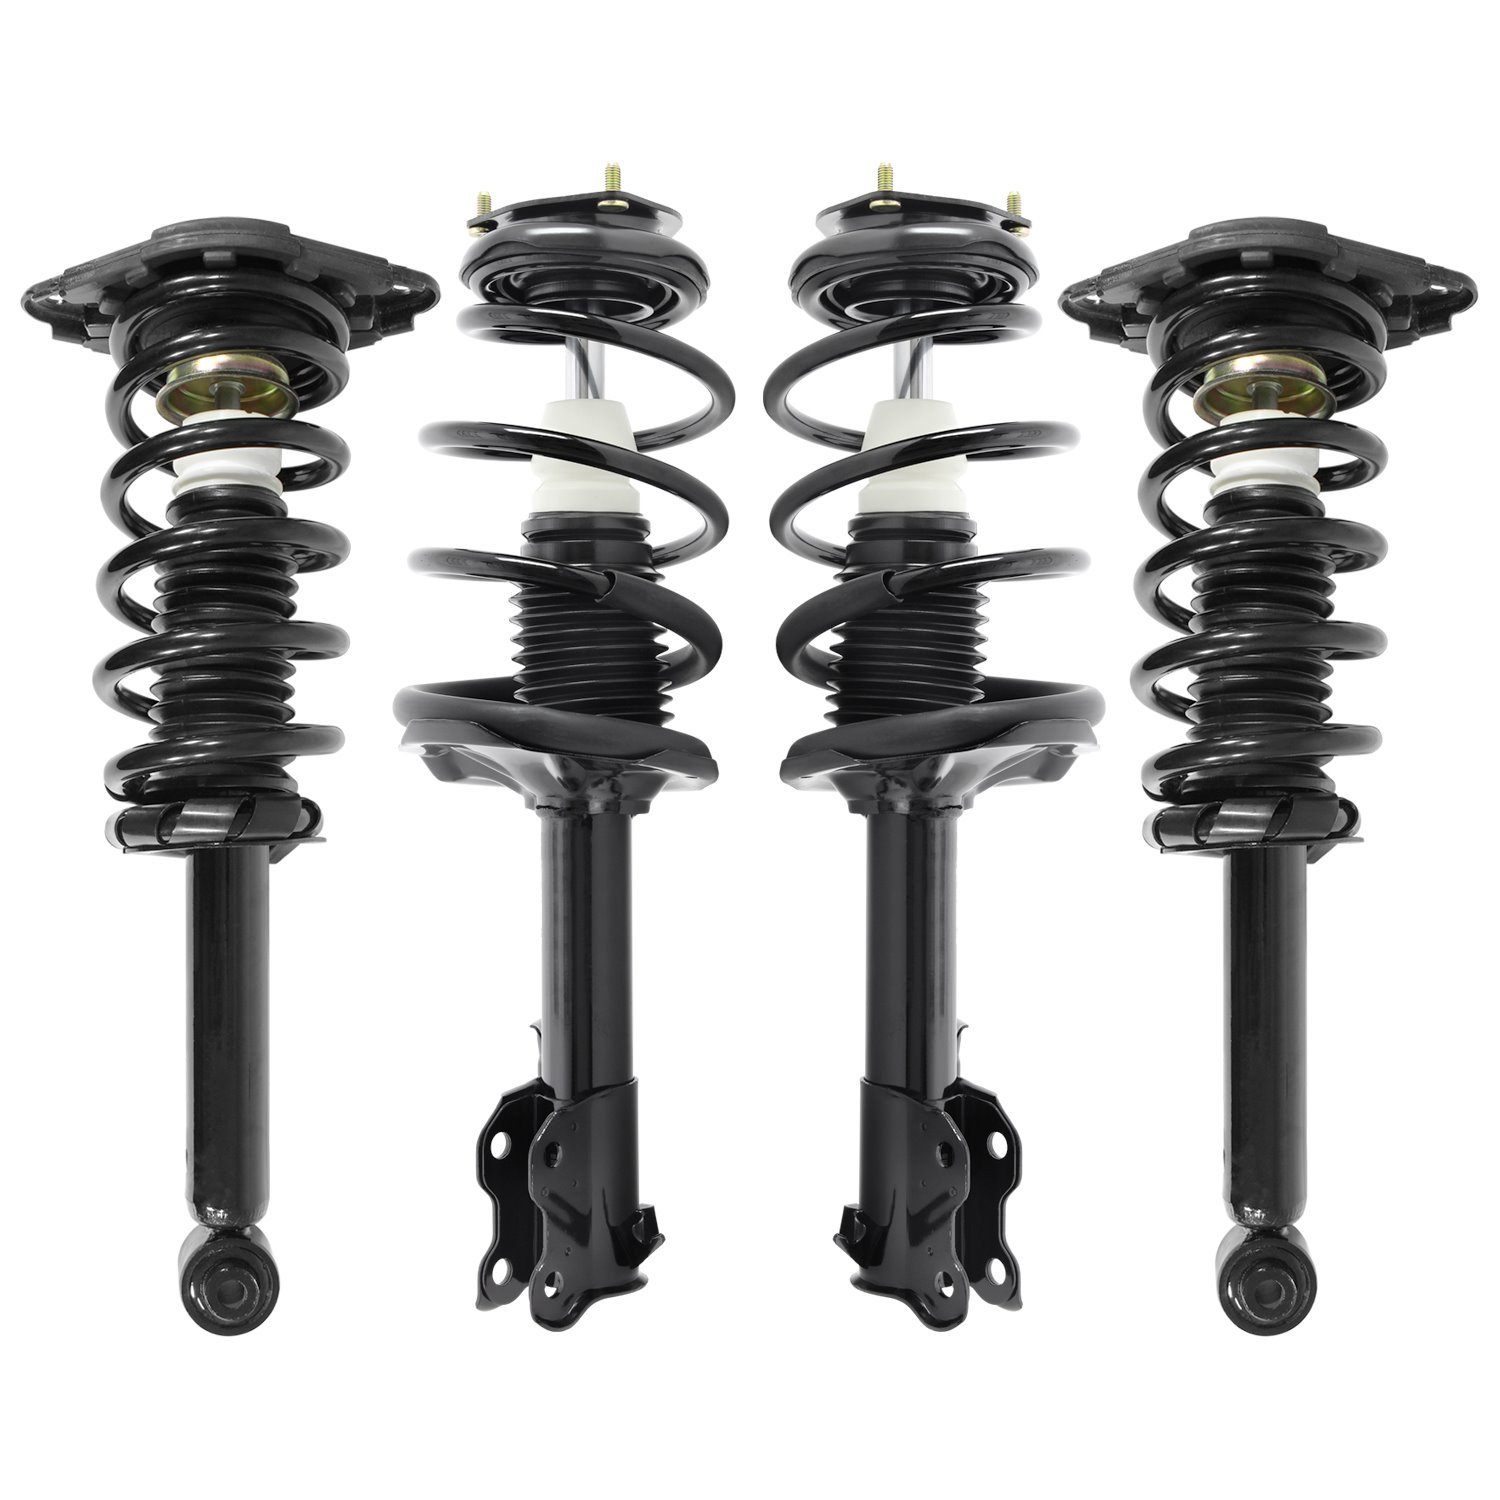 4-11575-15350-001 Front & Rear Suspension Strut & Coil Spring Assembly Kit Fits Select Nissan Sentra